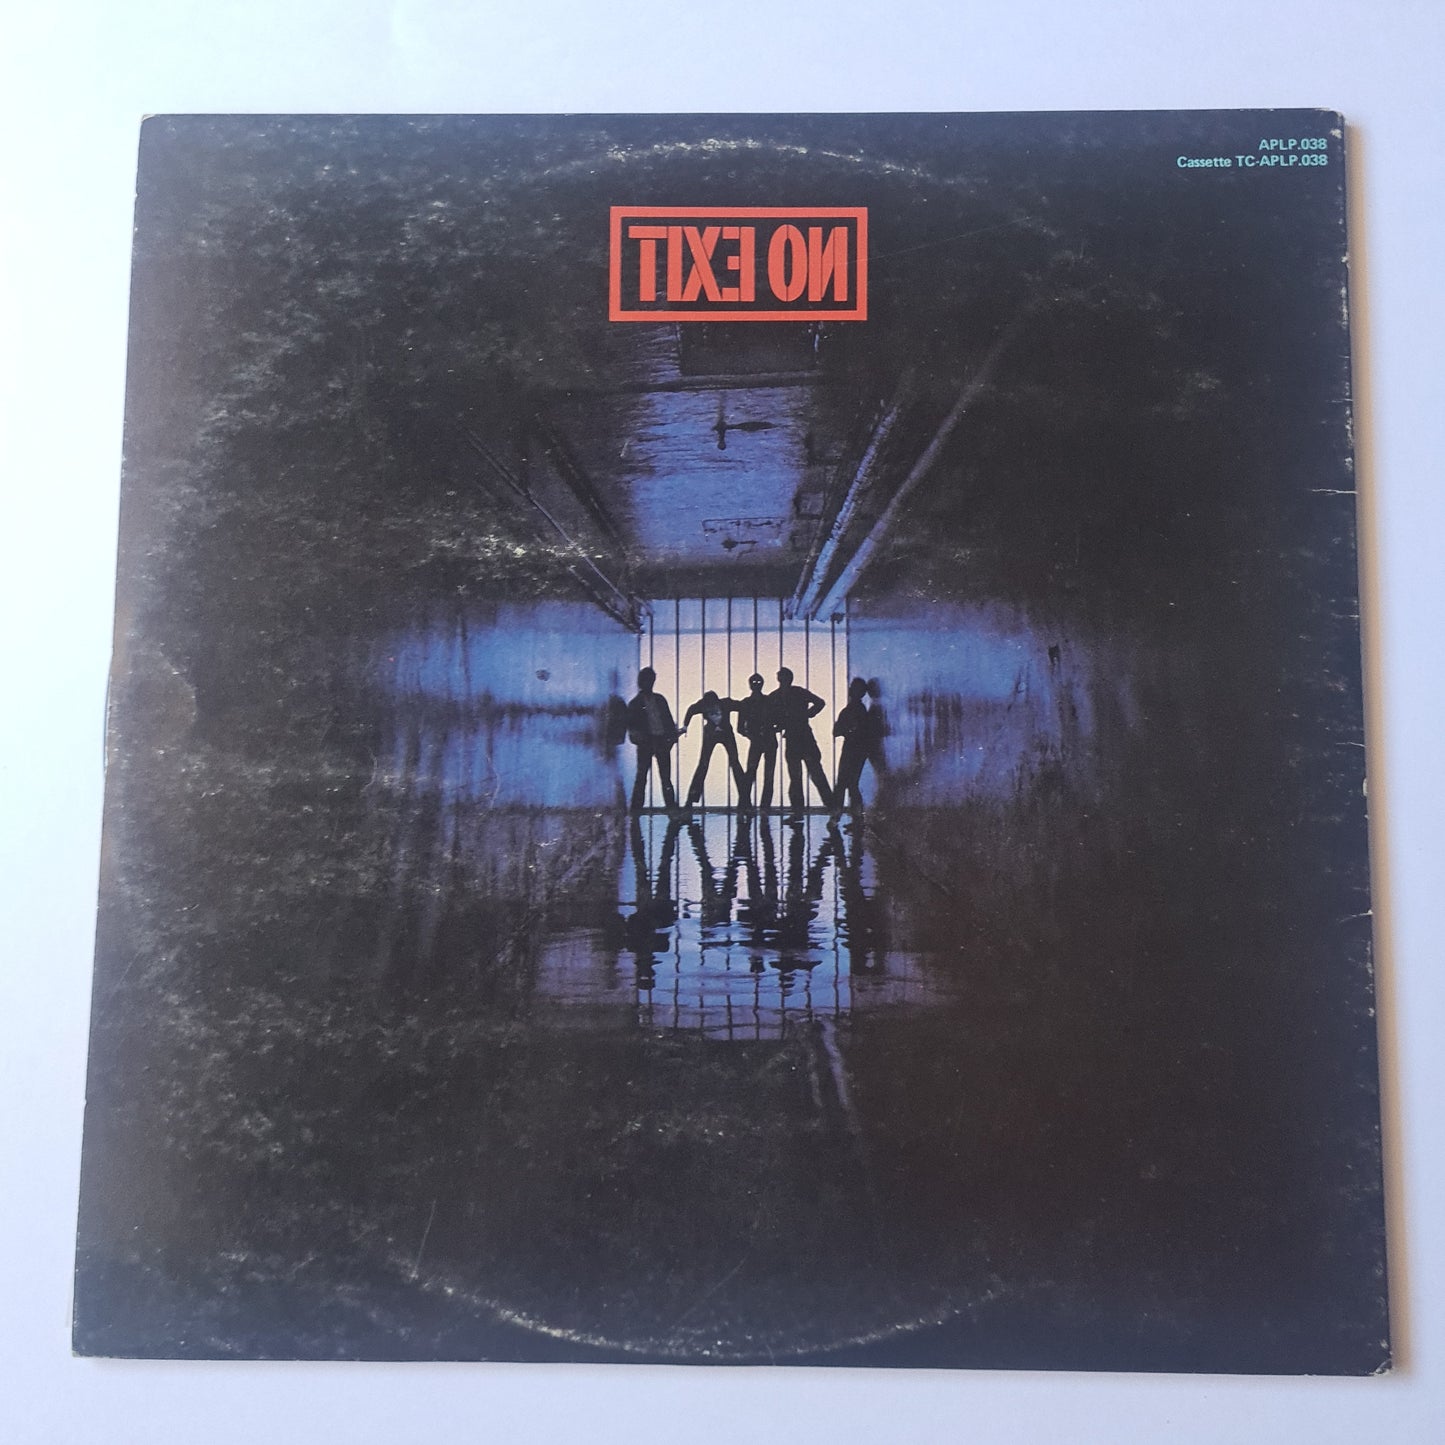 The Angels – No Exit - 1979 (Gatefold) - Vinyl Record